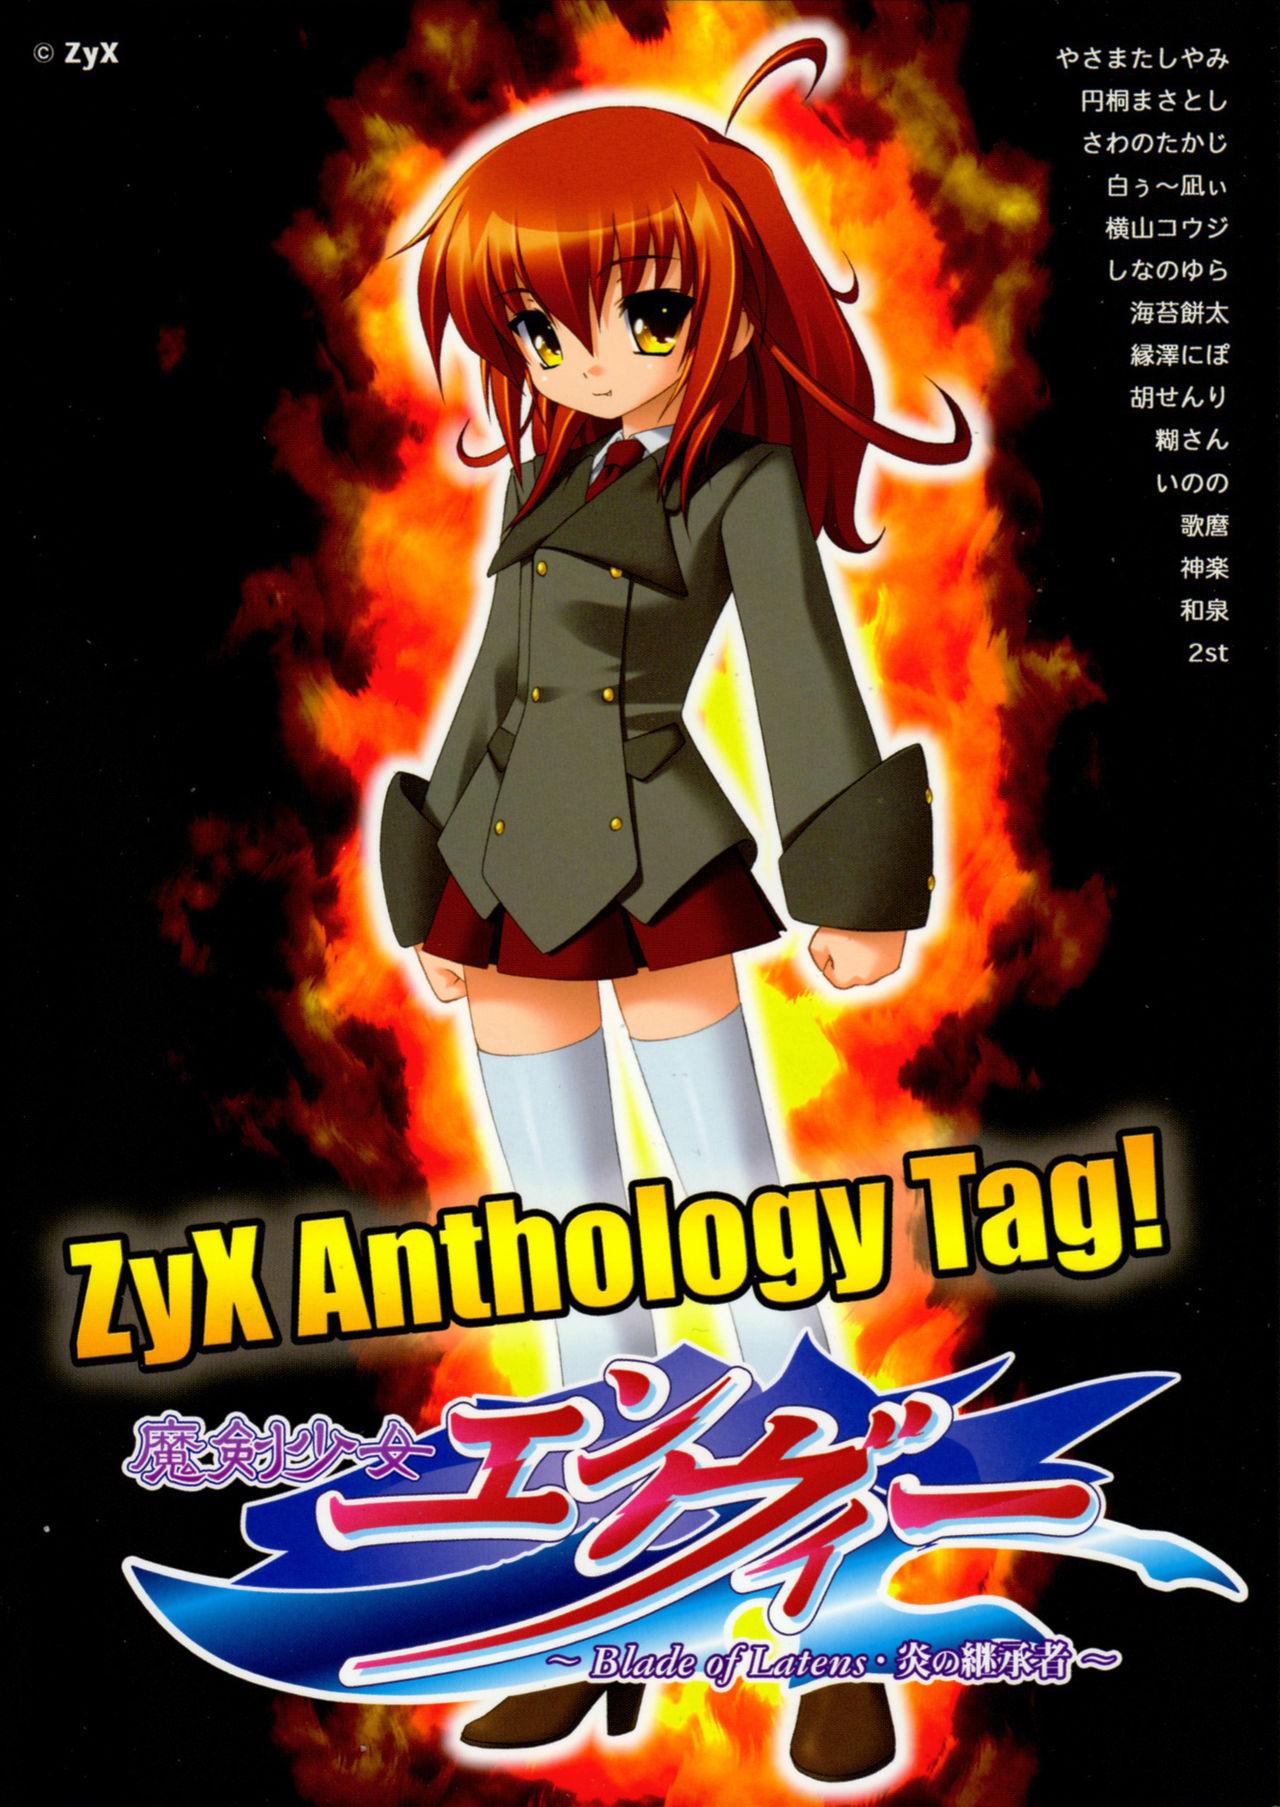 ZyX Anthology Tag! Raidy & Envy 14